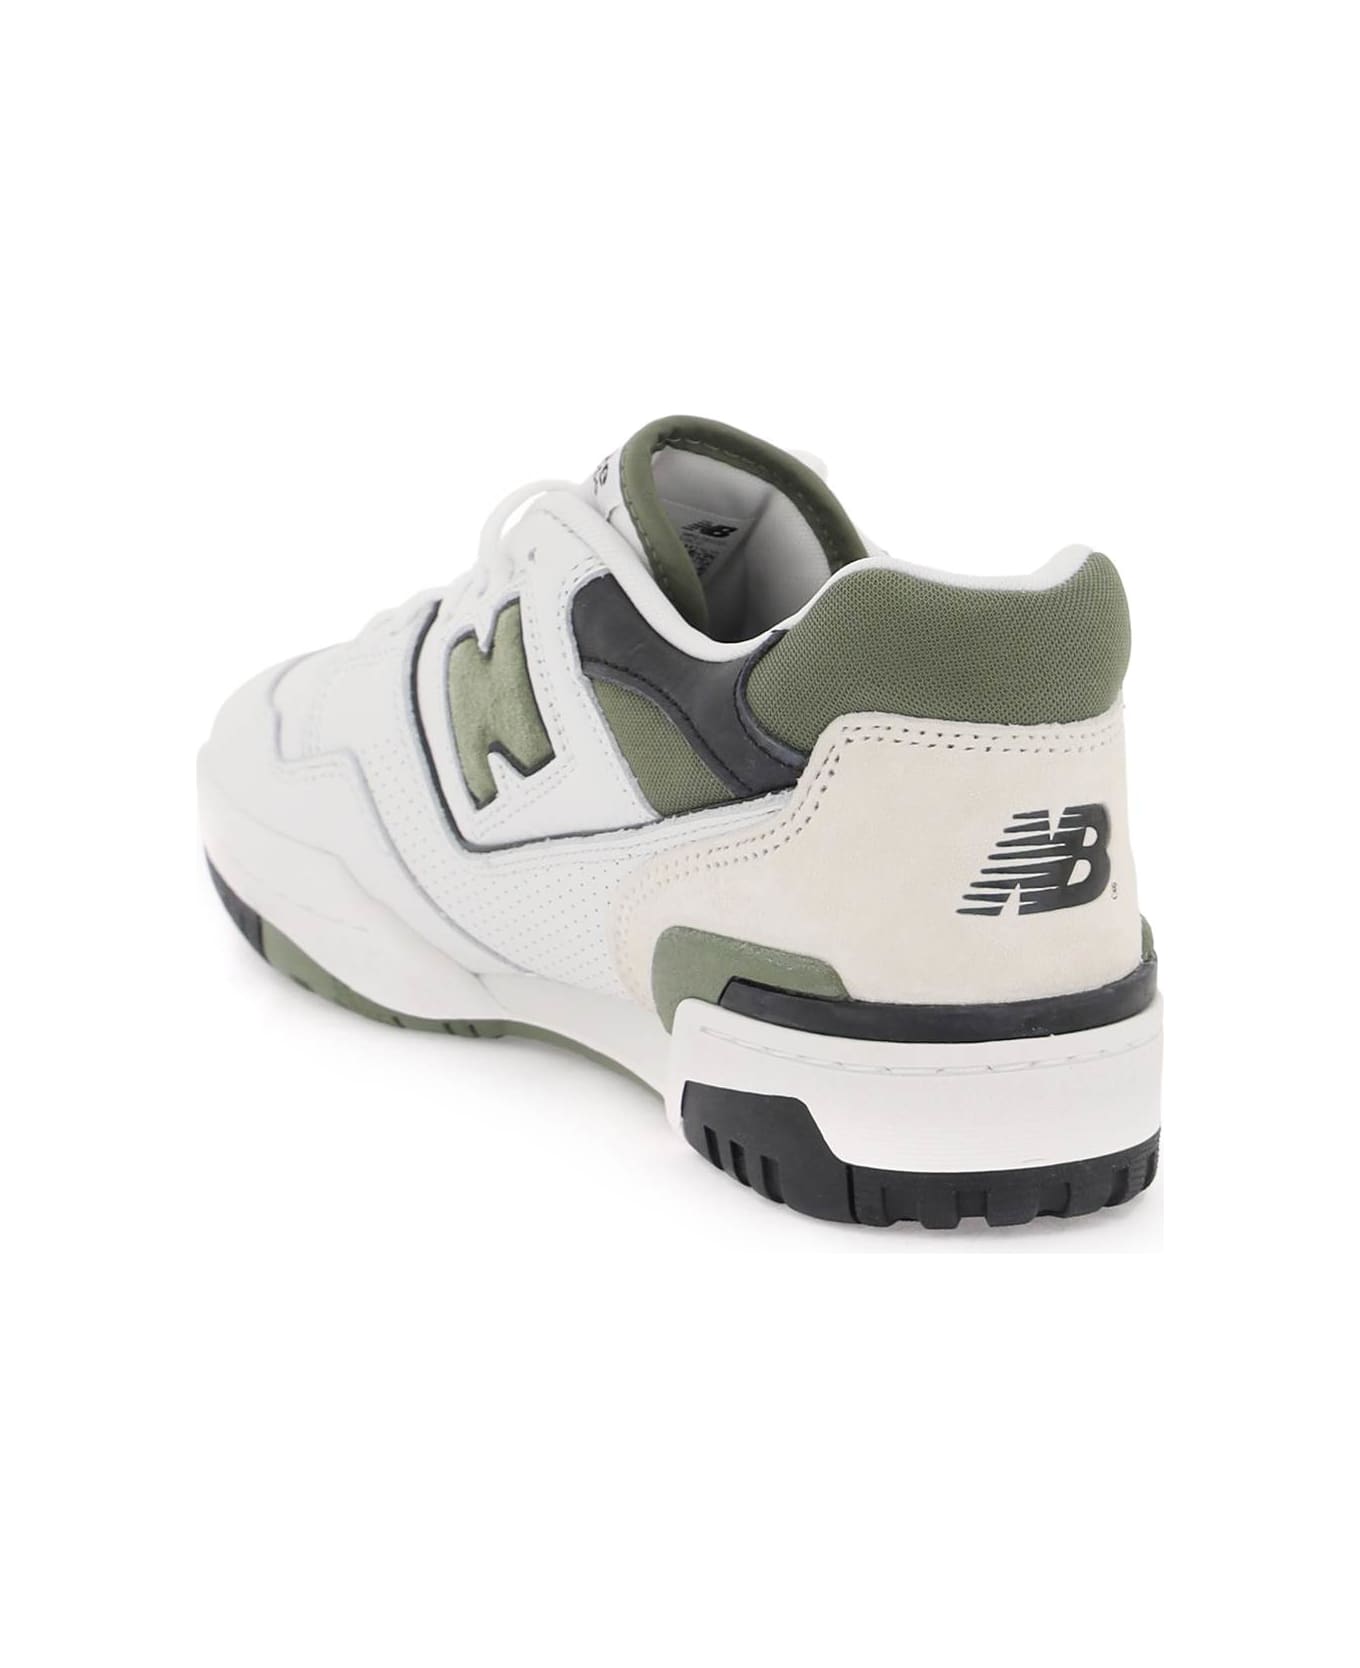 New Balance 550 Sneakers - WHITE GREEN (White)